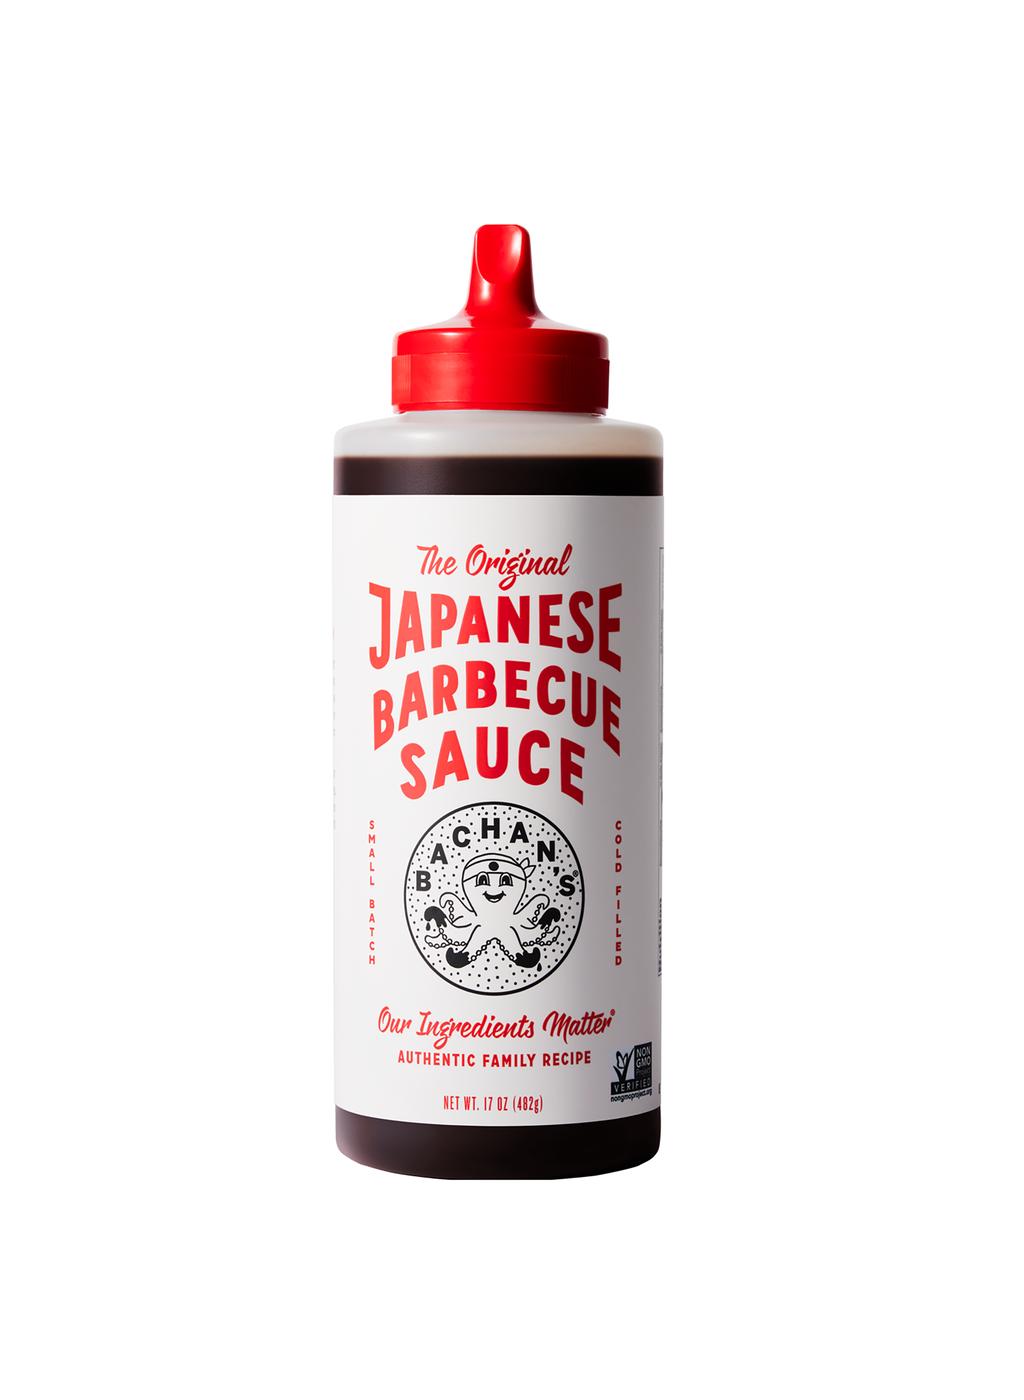 Bachan's Original Japanese Barbecue Sauce; image 1 of 3